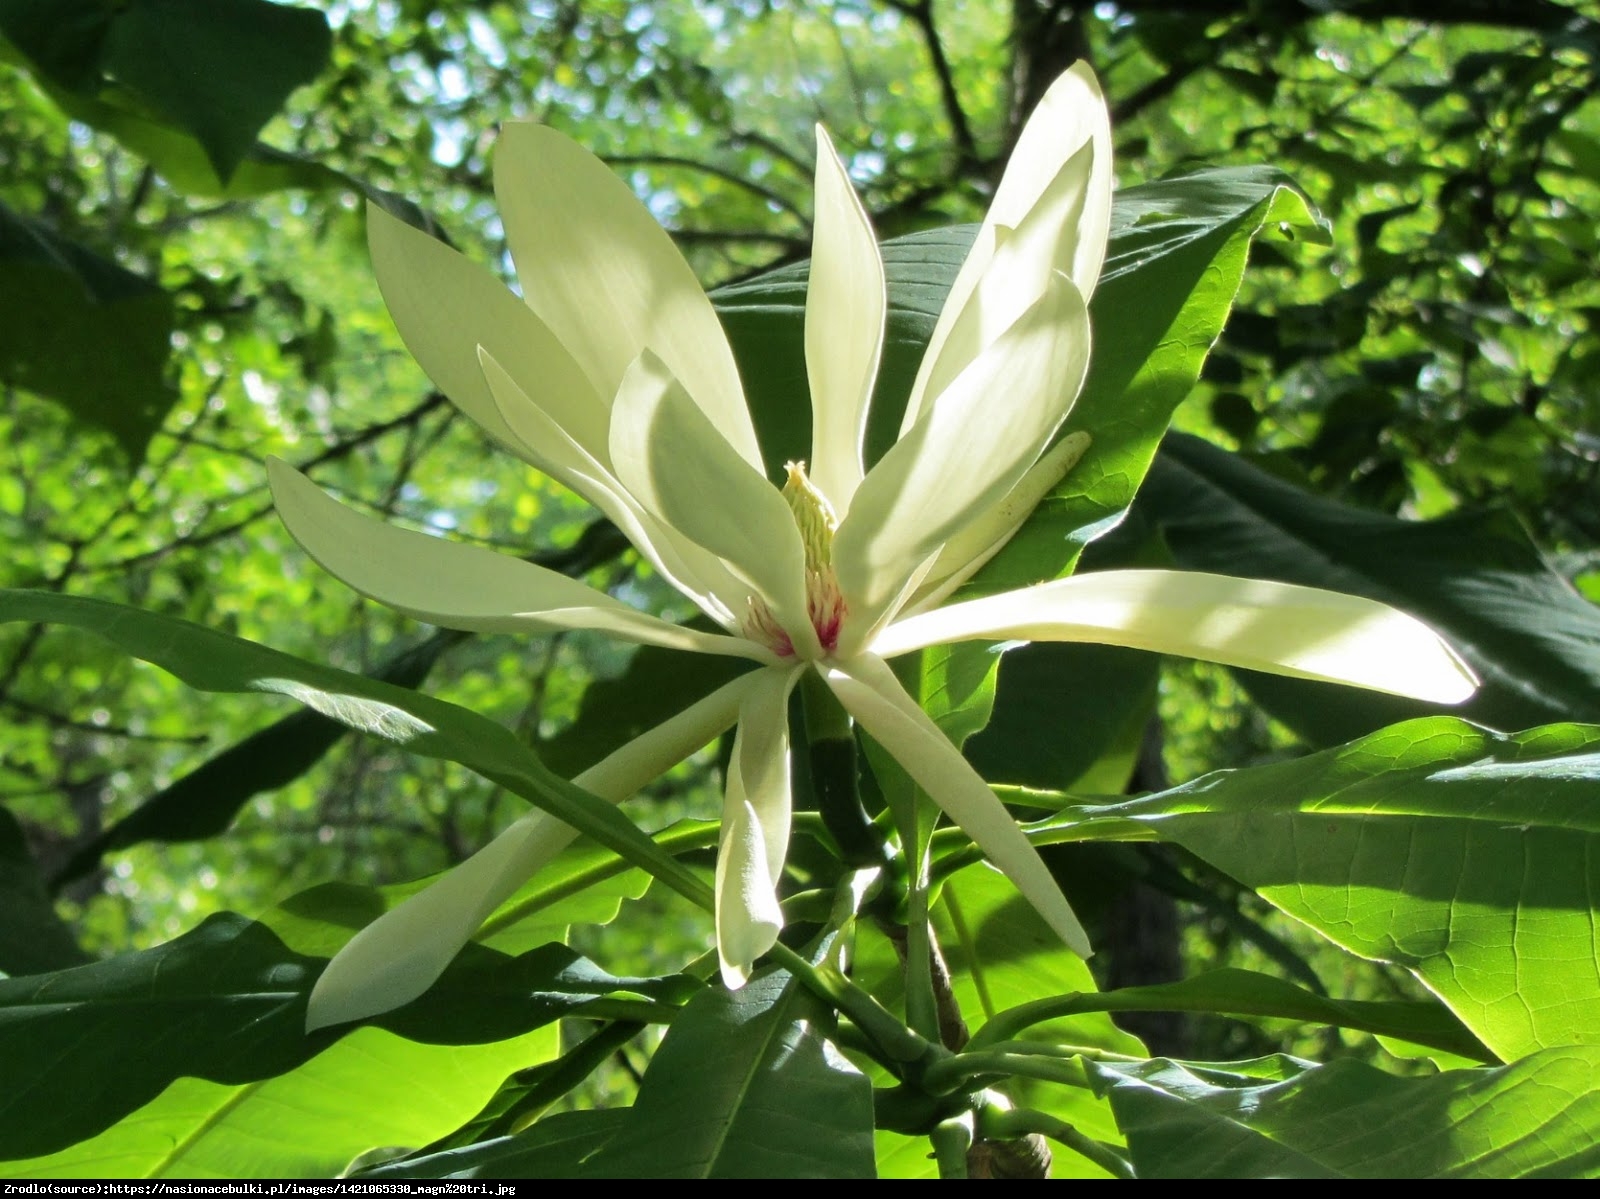 Magnolia parasolowata - Magnolia tripetala